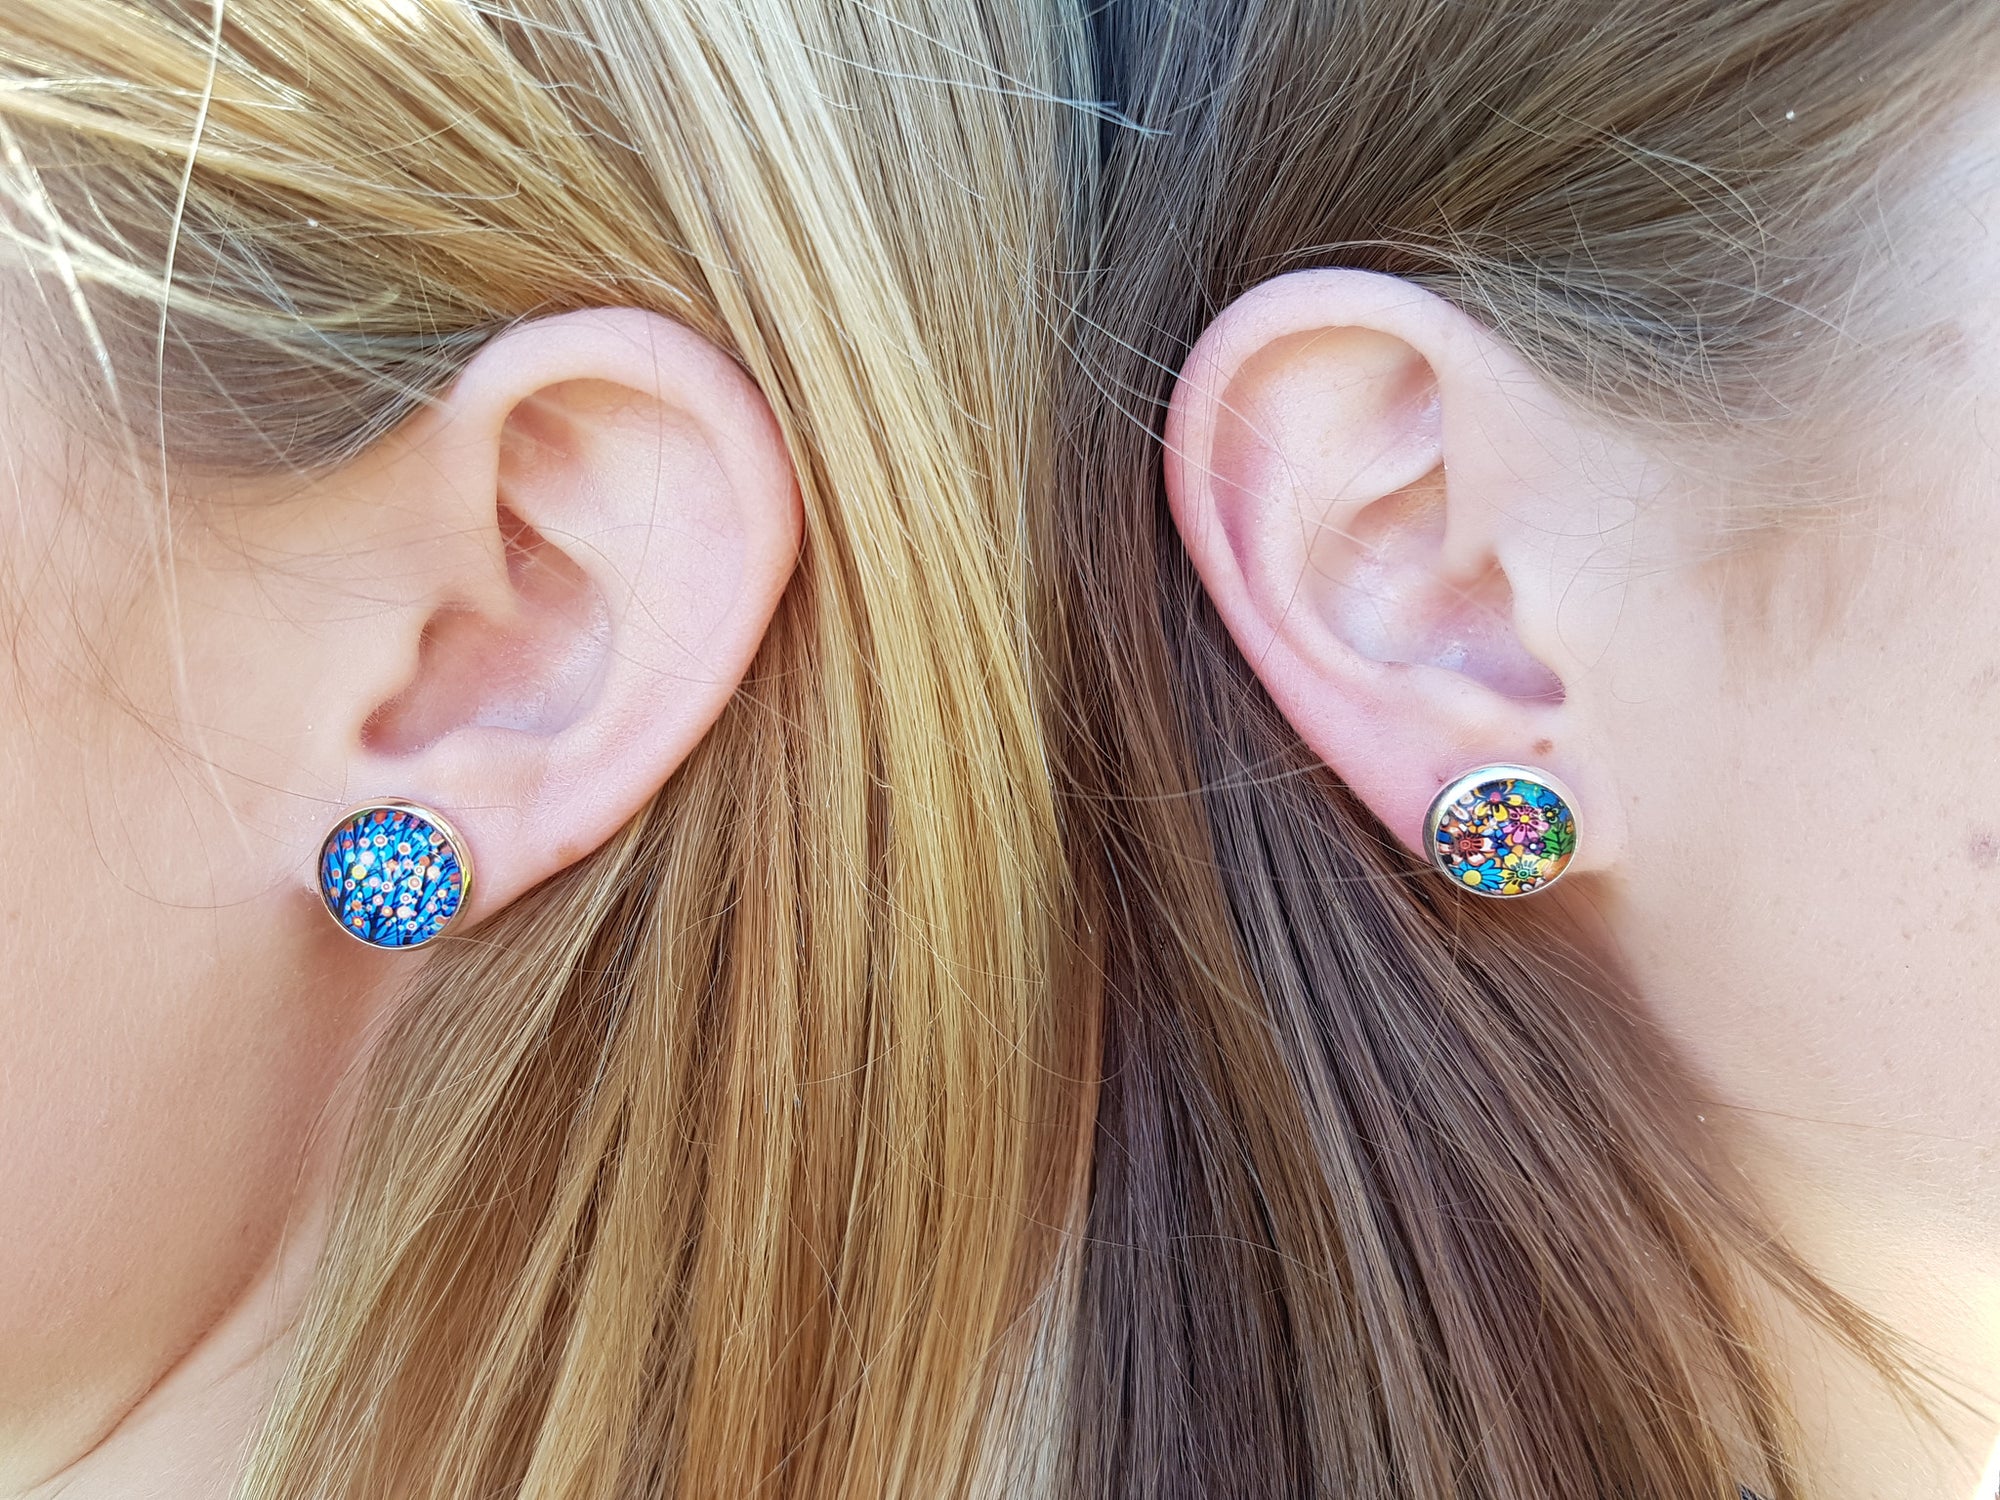 Goal Digger Pop Stud Earrings | Ella & Fern